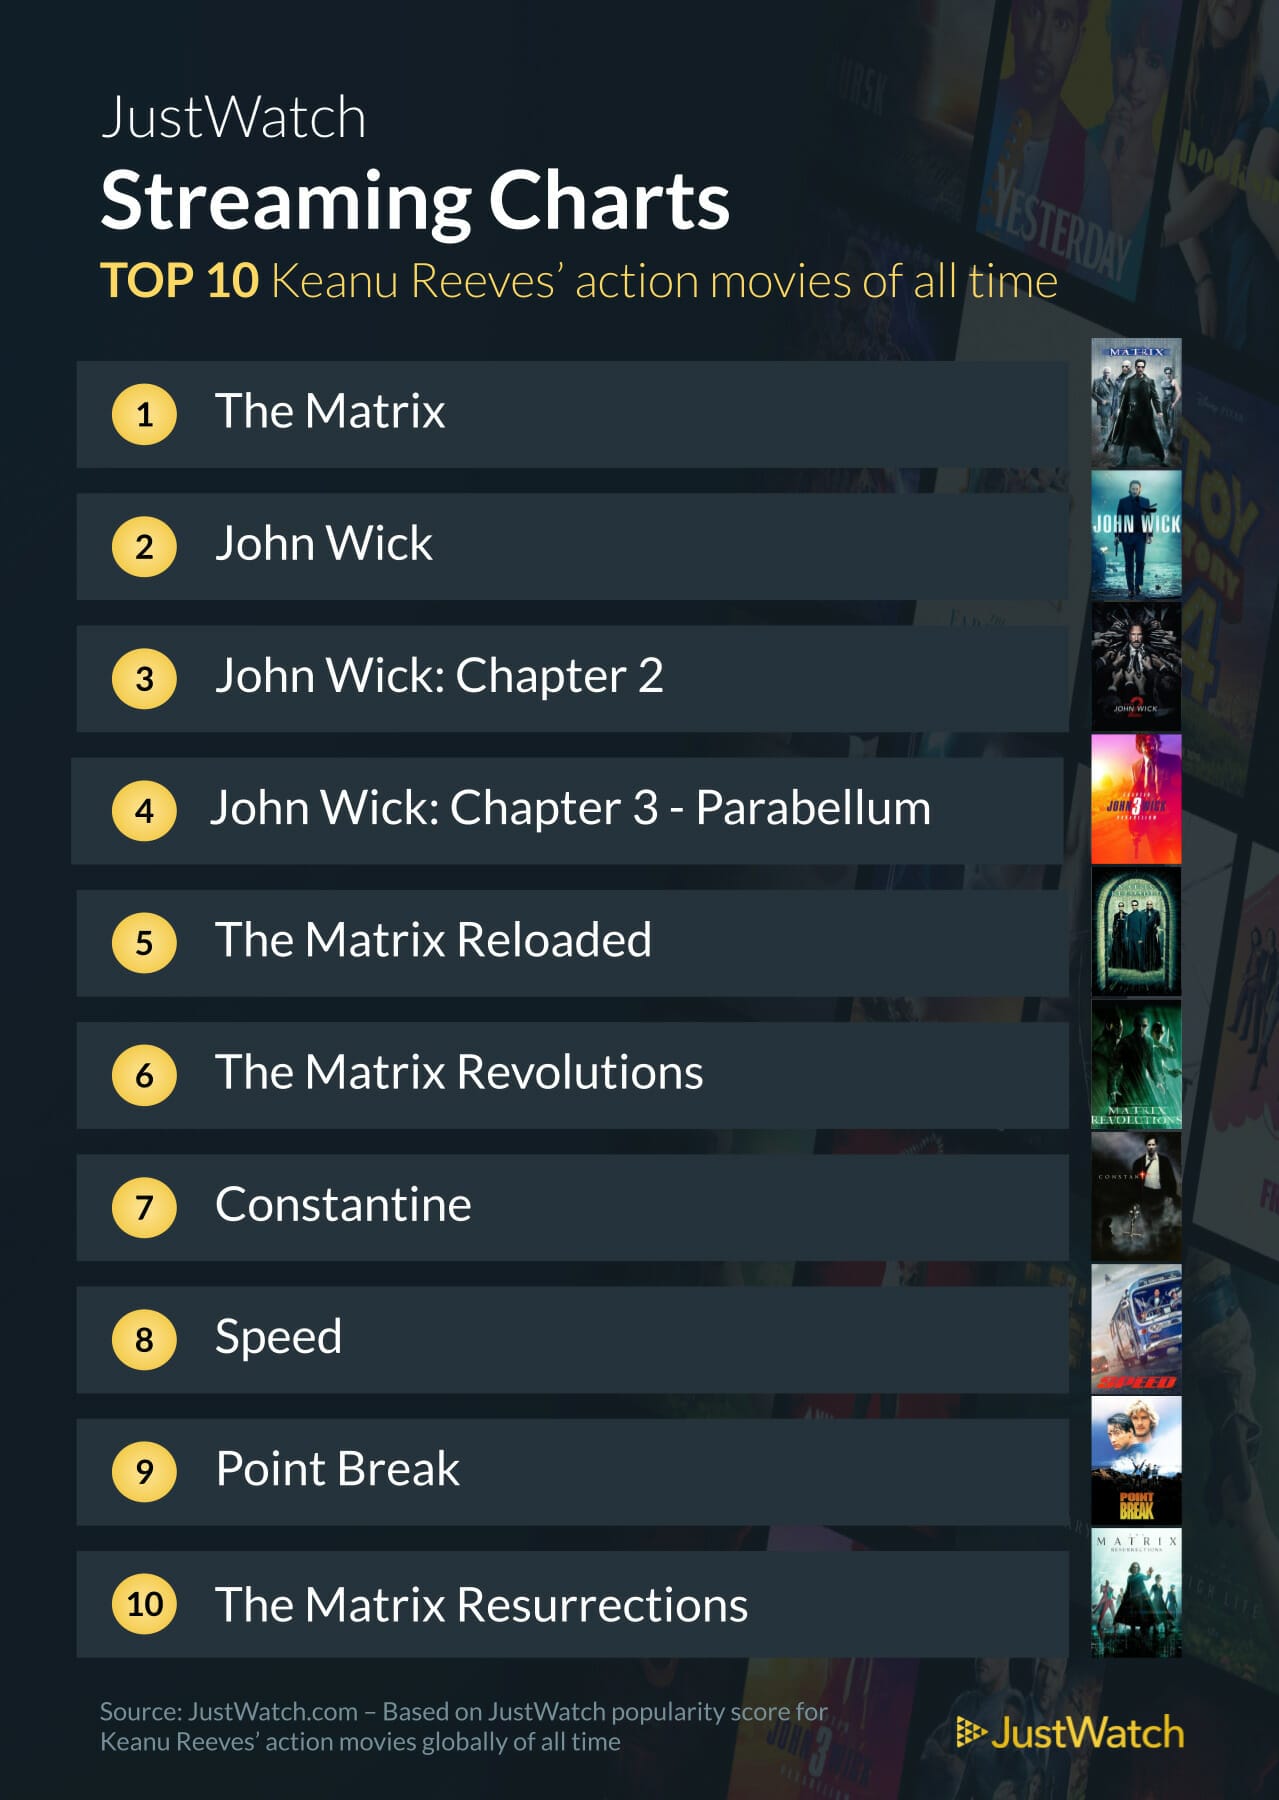 1) The Matrix
2) John Wick
3) John Wick 2
4) John Wick 3
5) The Matrix Reloaded